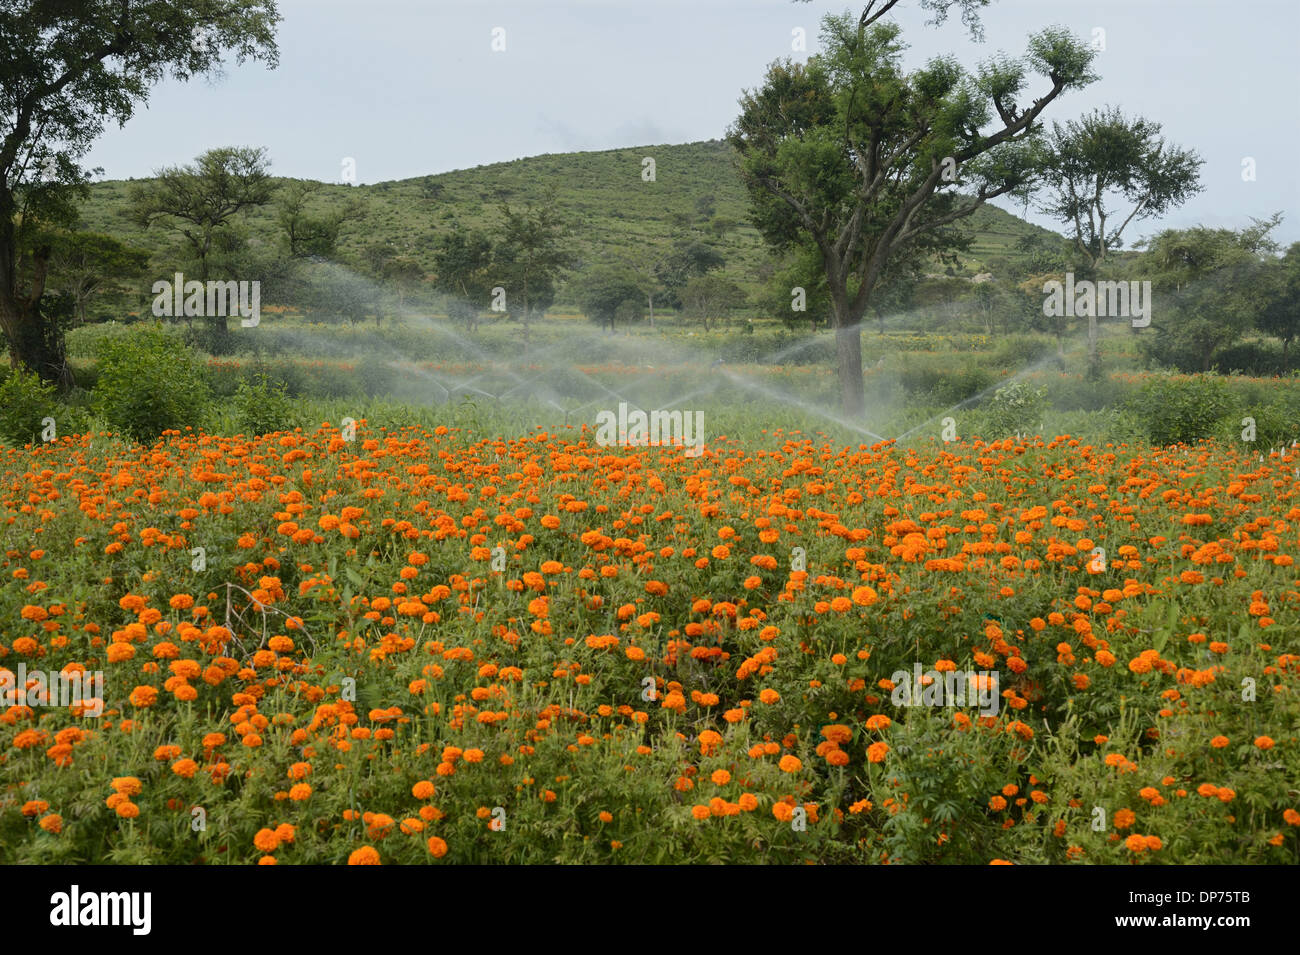 Floriculture irrigator system watering Aztec Marigold (Tagetes erecta) flowers growing in field Gundelpet Karnataka India Stock Photo